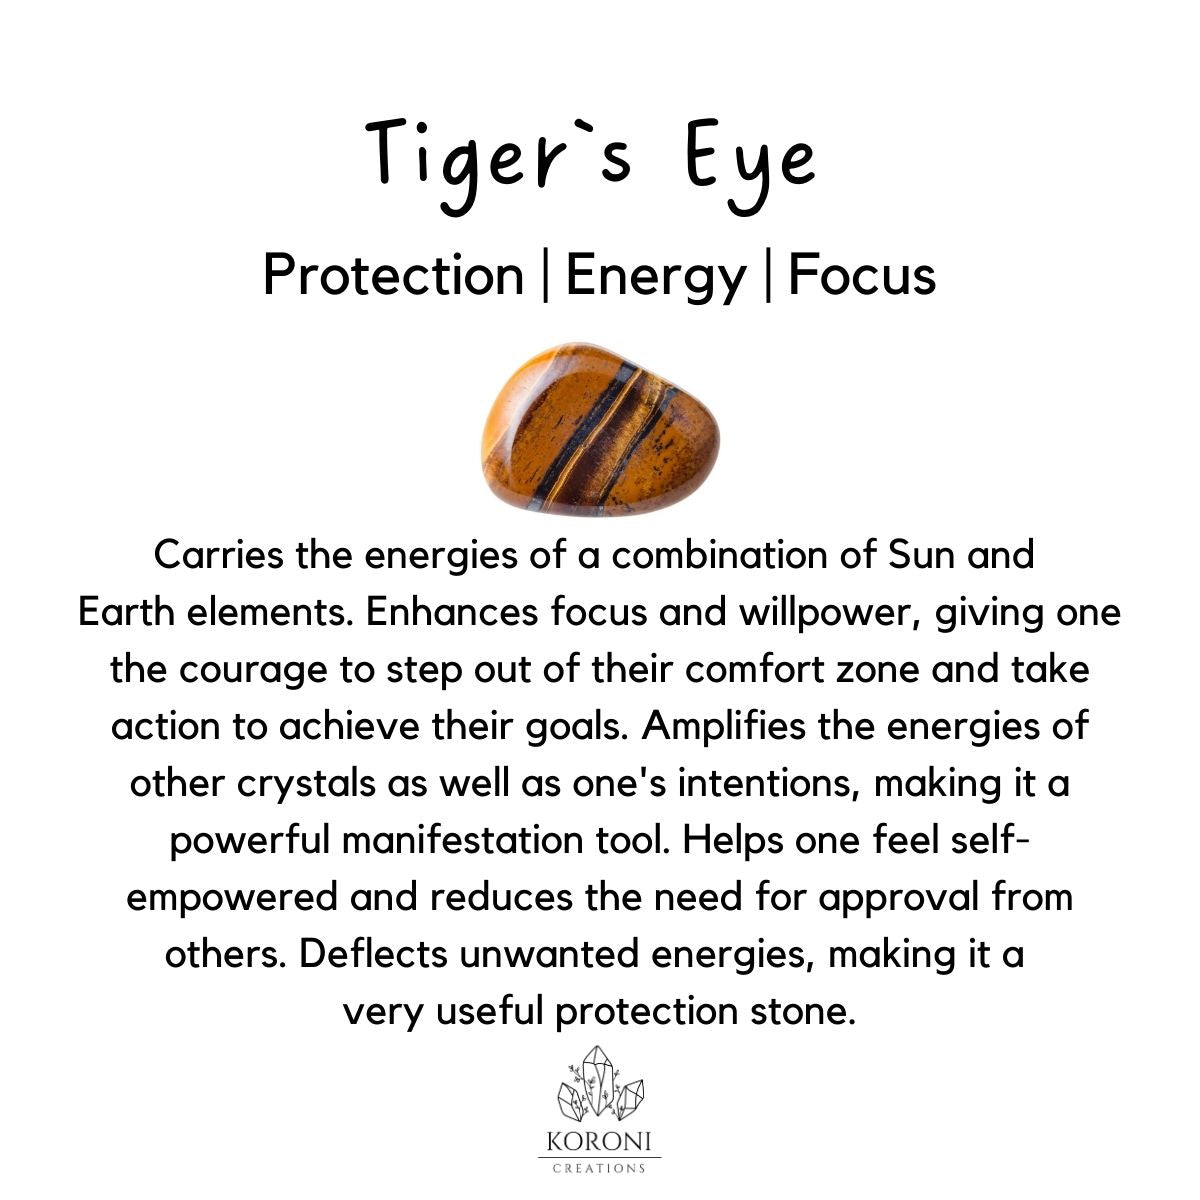 Tigers Eye gemstone benefits.